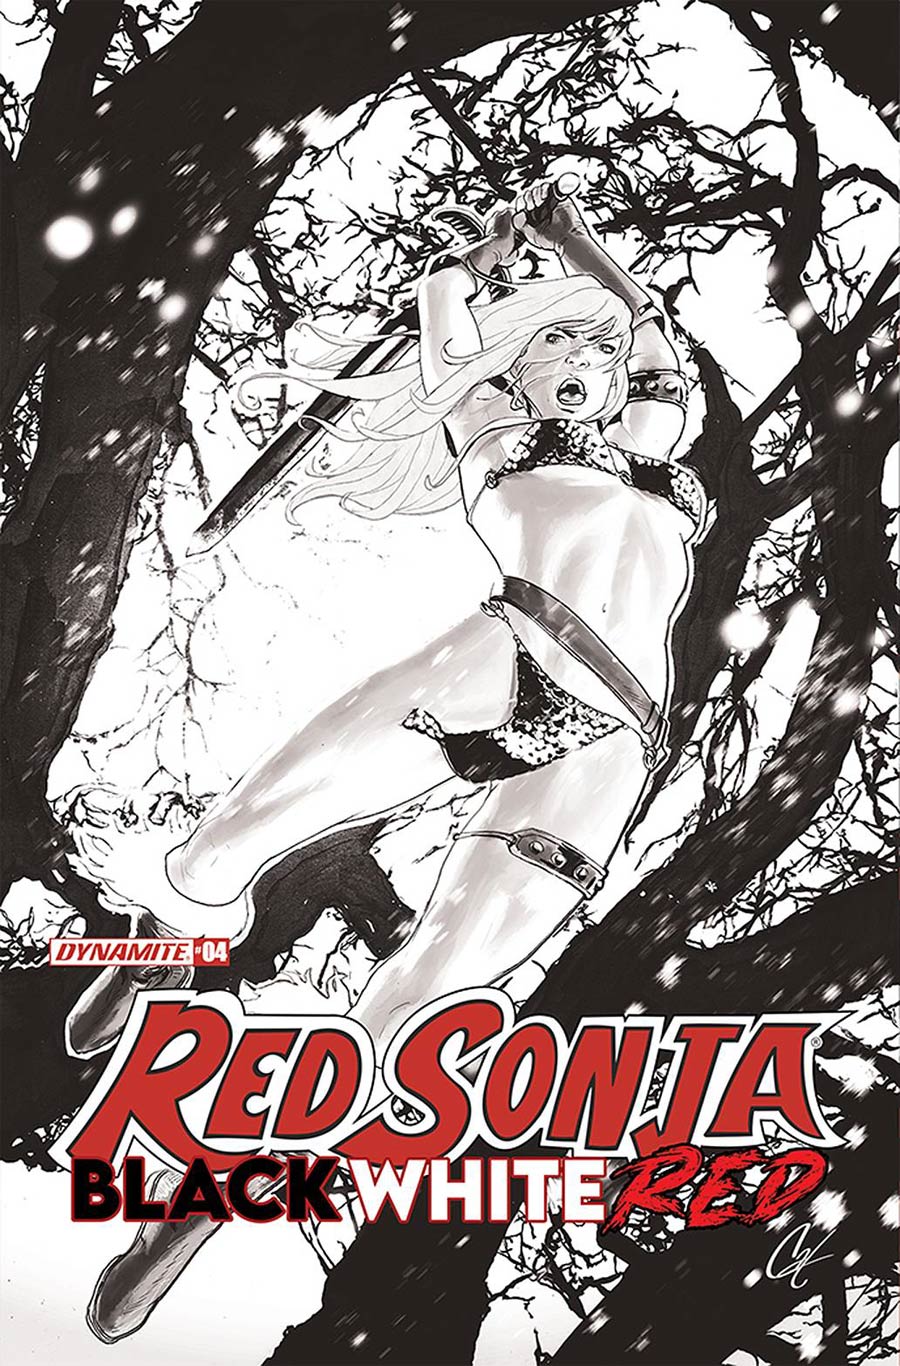 Red Sonja Black White Red #4 Cover F Incentive Cat Staggs Black & White Line Art Cover